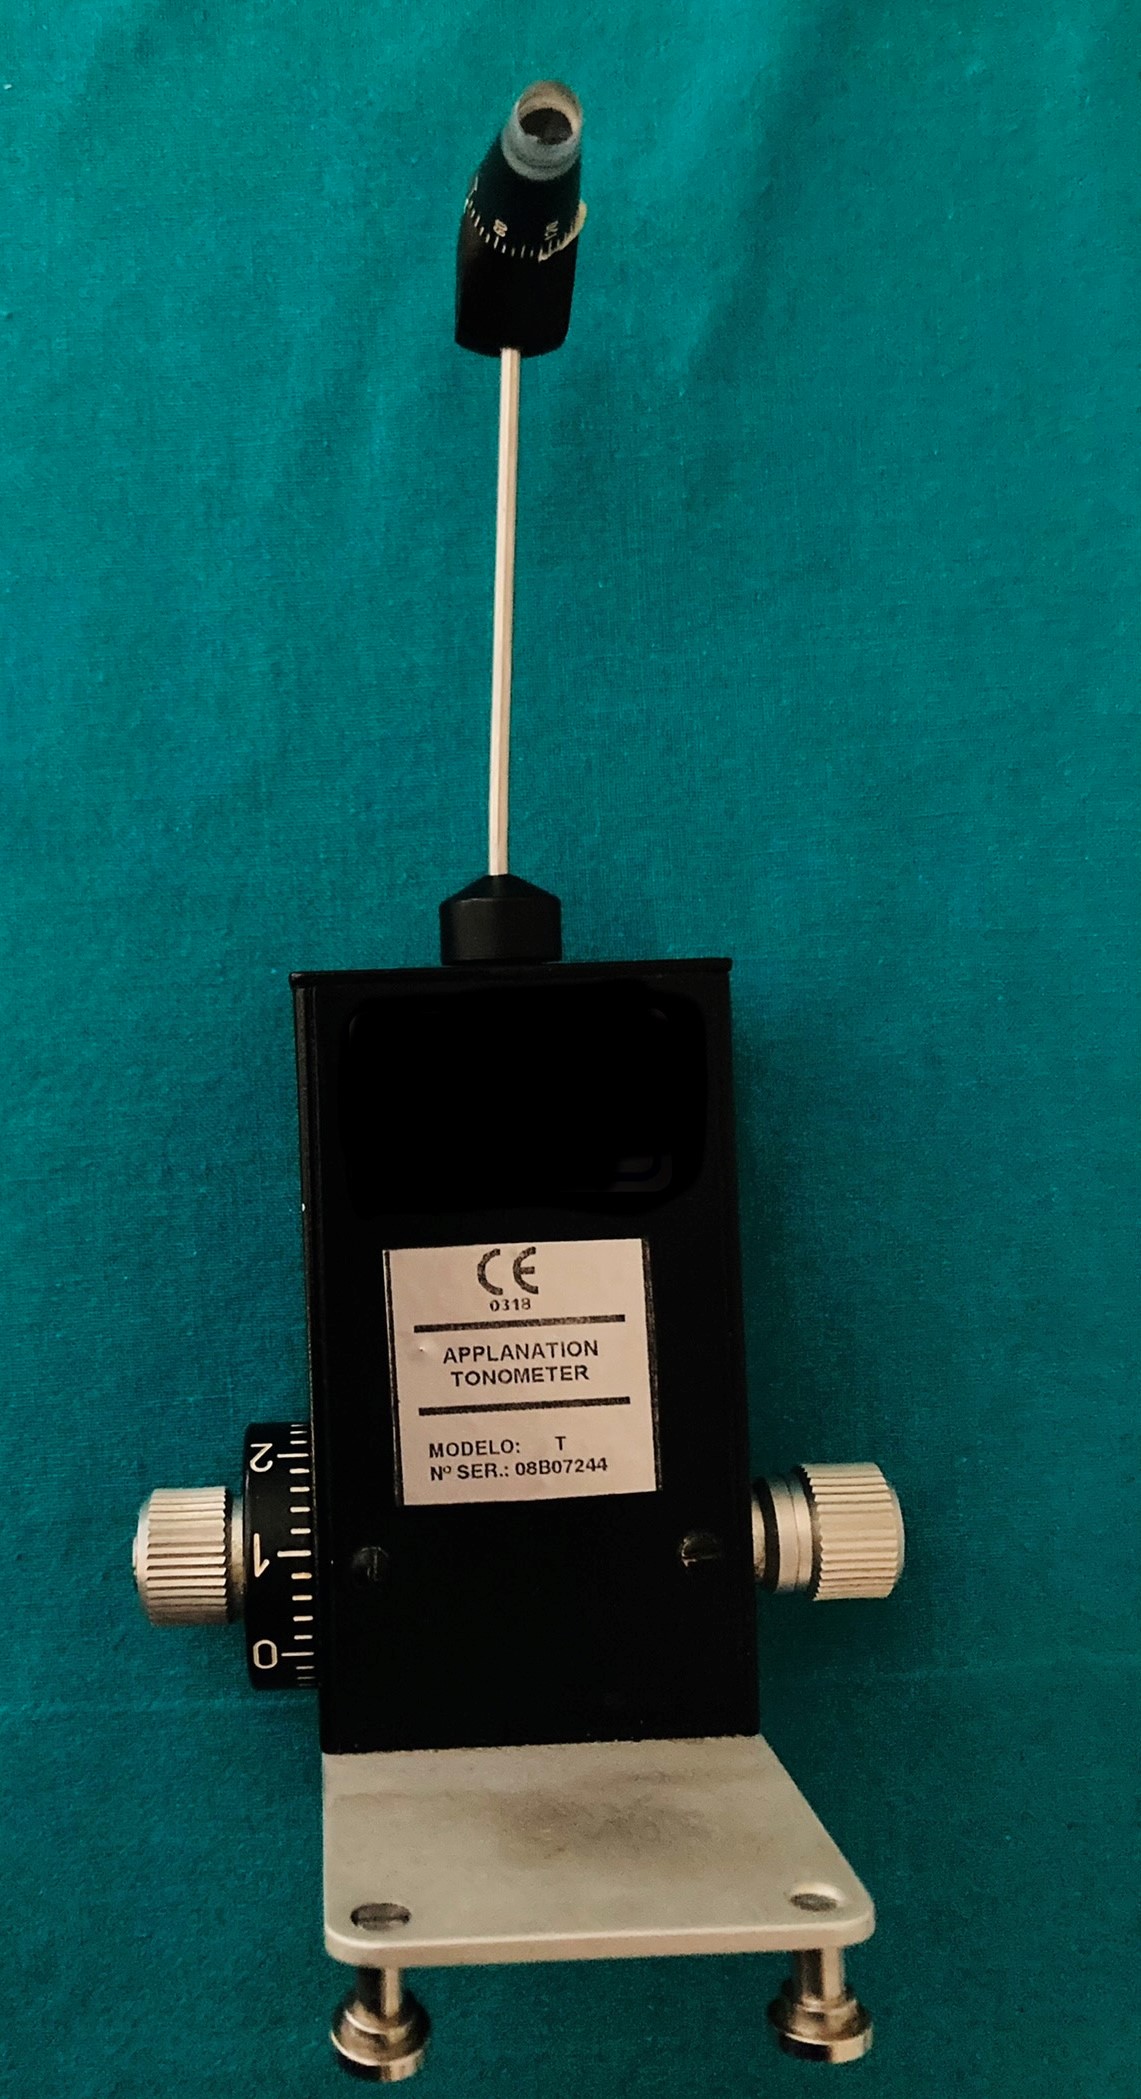 Goldmann Applanation Tonometer (GAT) used to measure intraocular pressure (IOP).